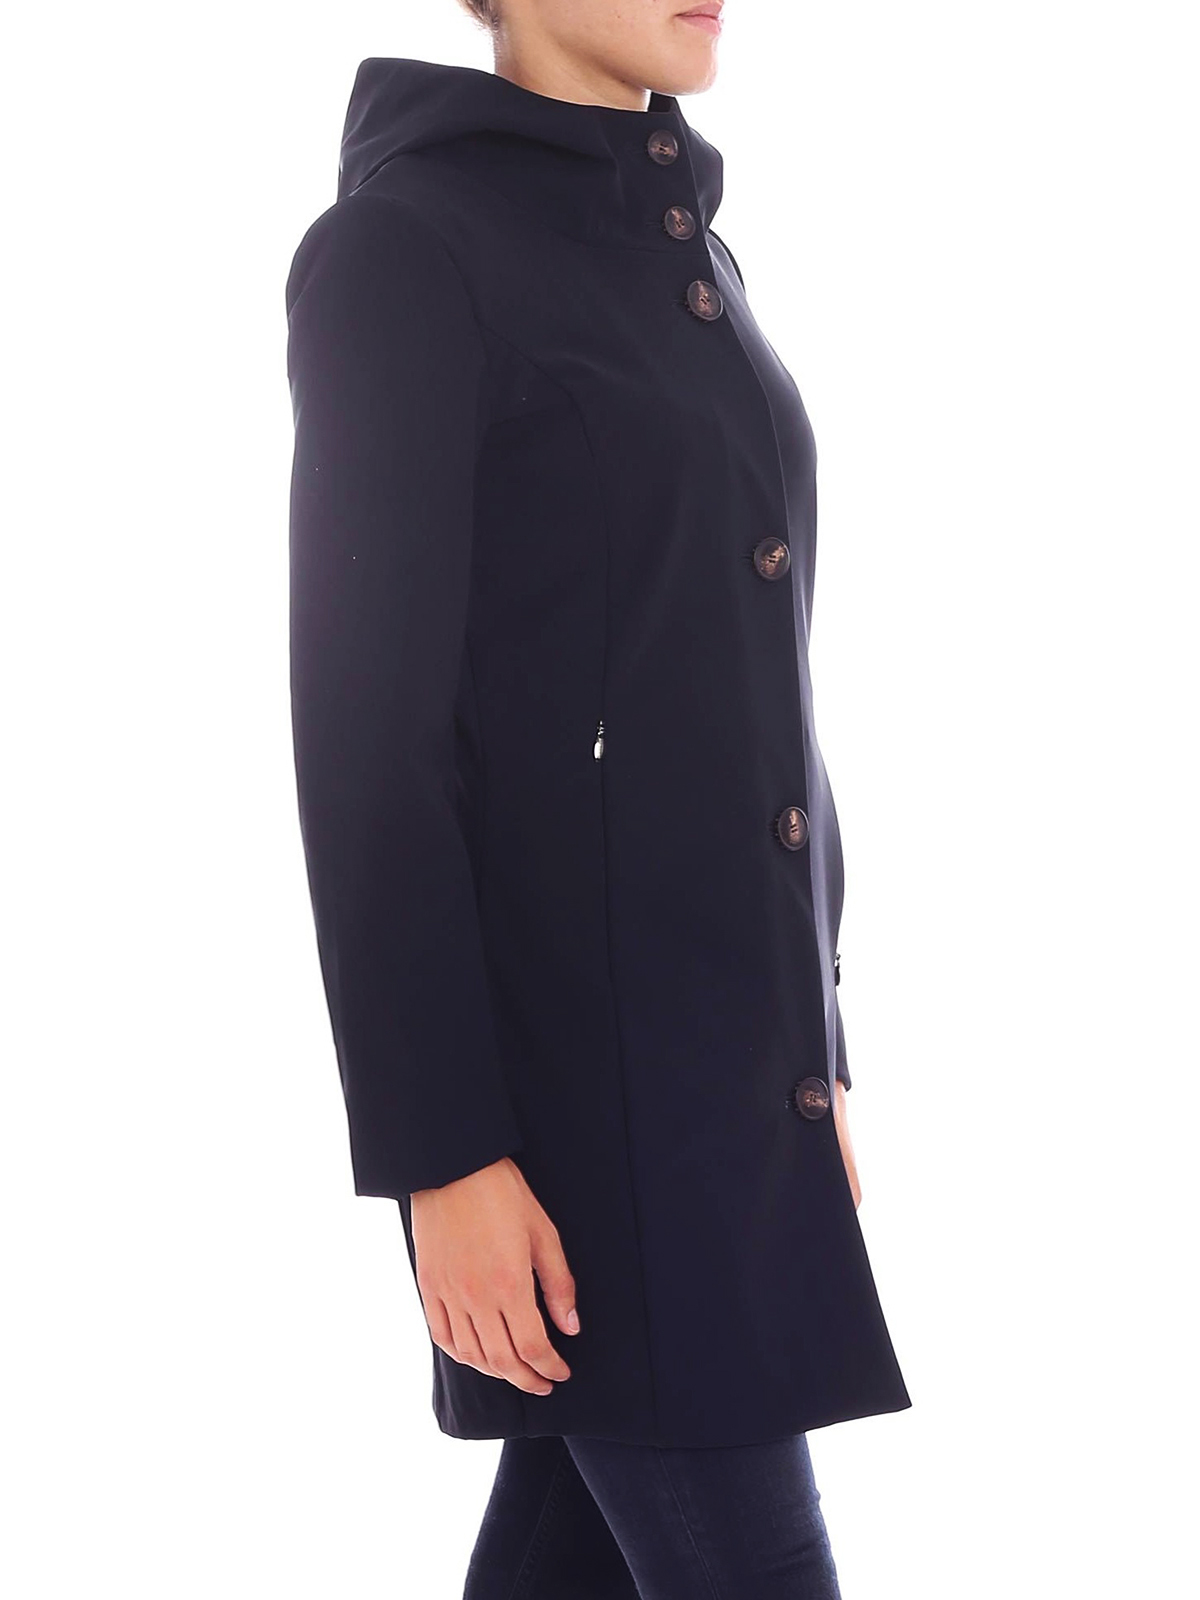 Parkas RRD Roberto Ricci Designs - Thermo Parka Lady black nylon coat -  W1853410